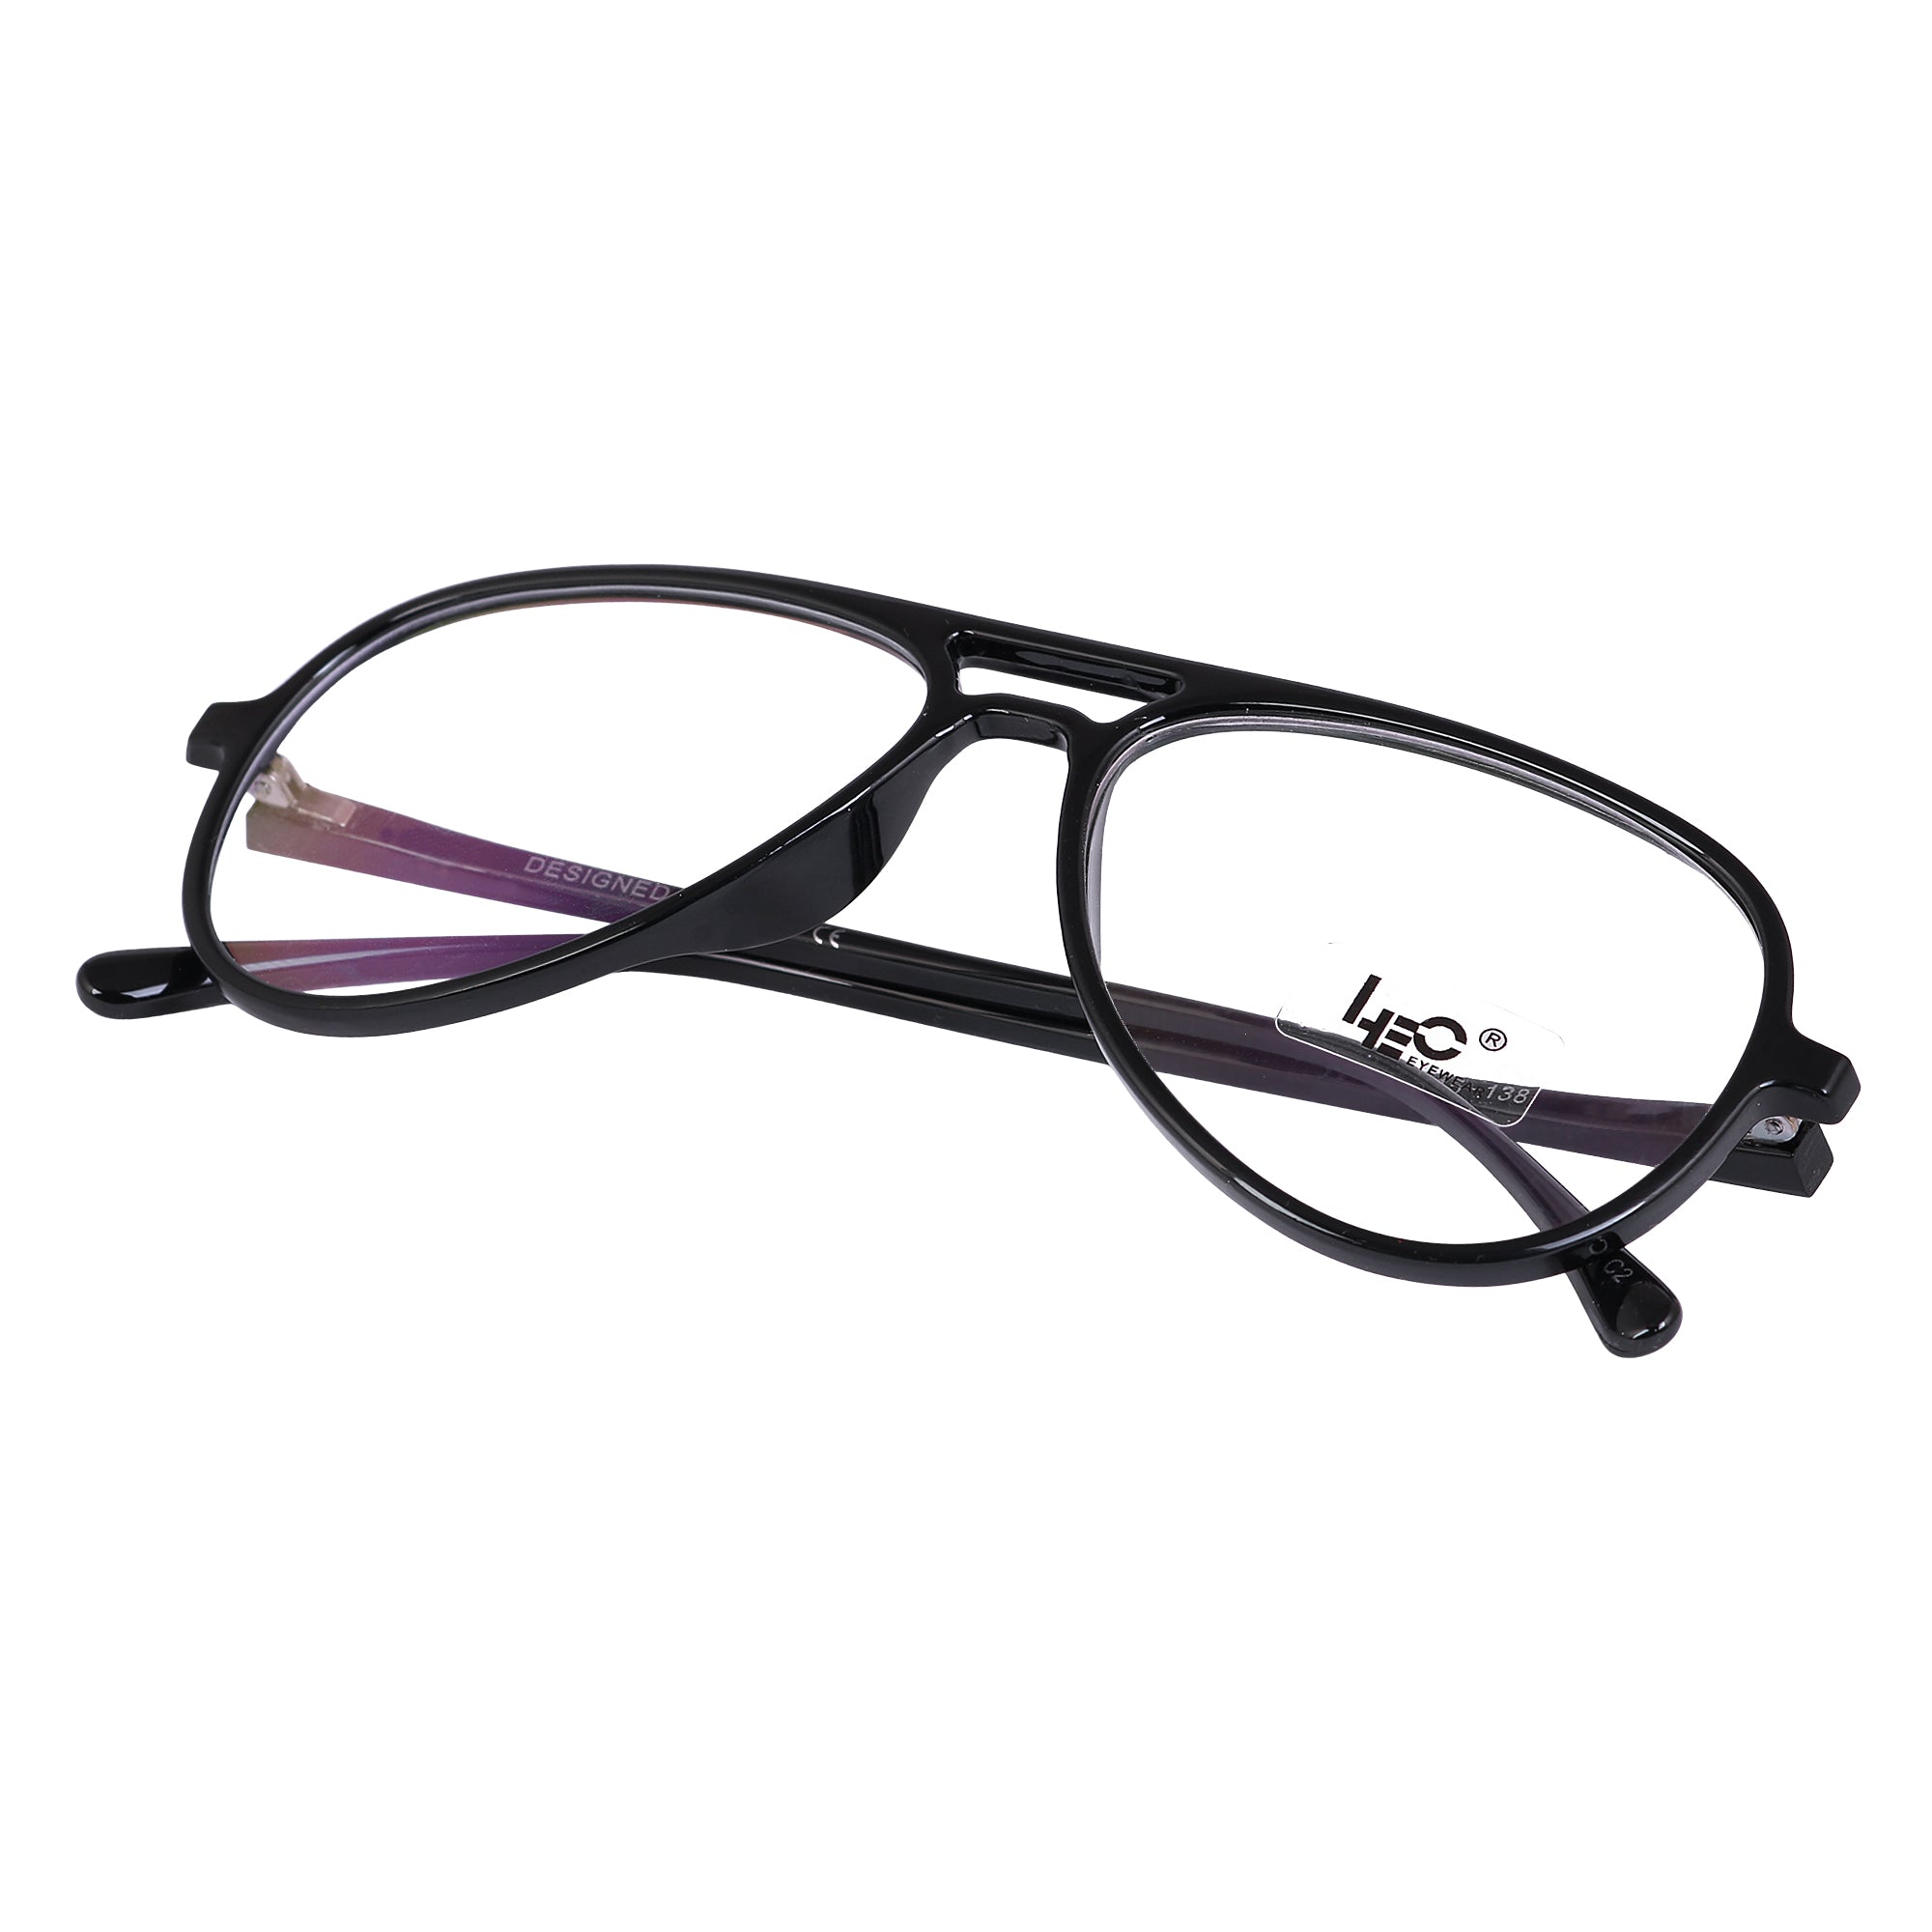 Black Rimmed Aviator Eyeglasses - L2788